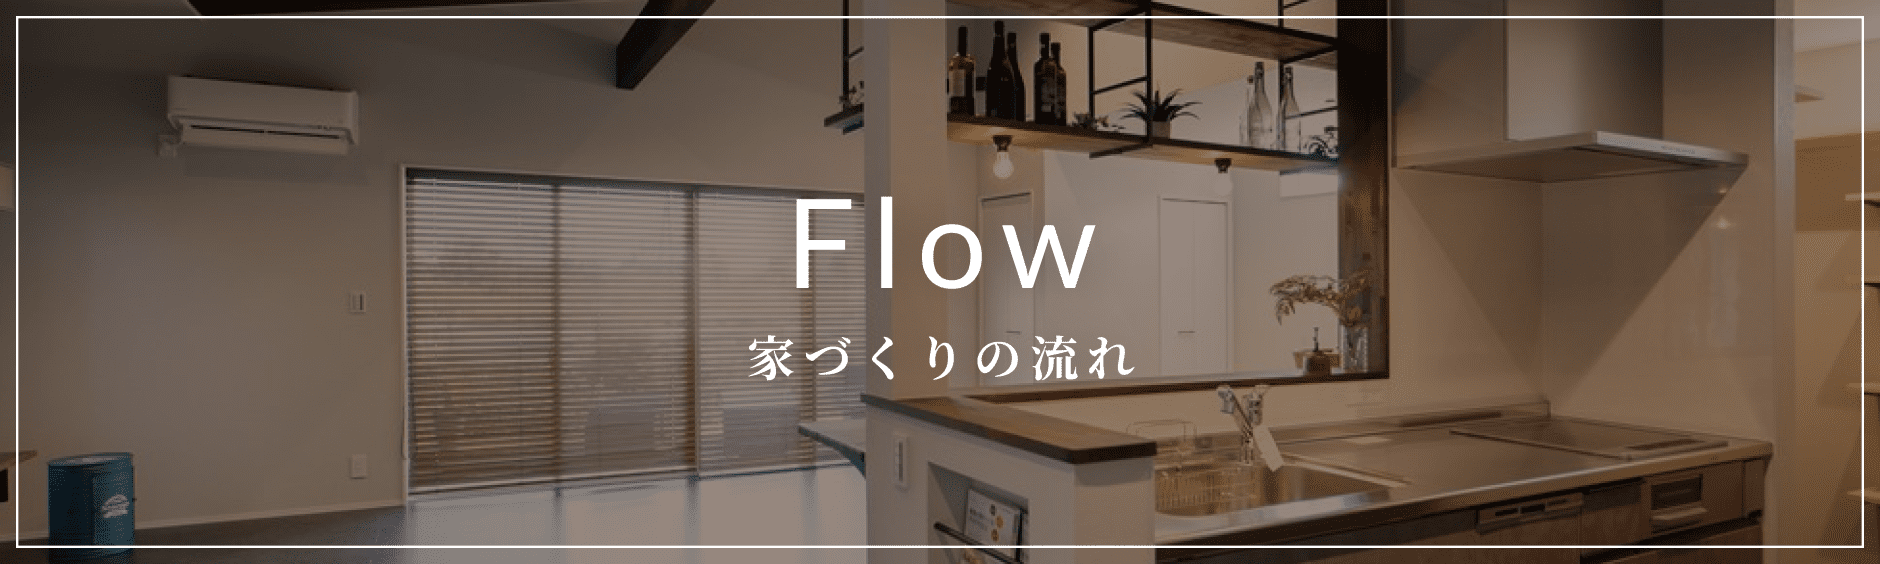 flow 家づくりの流れ